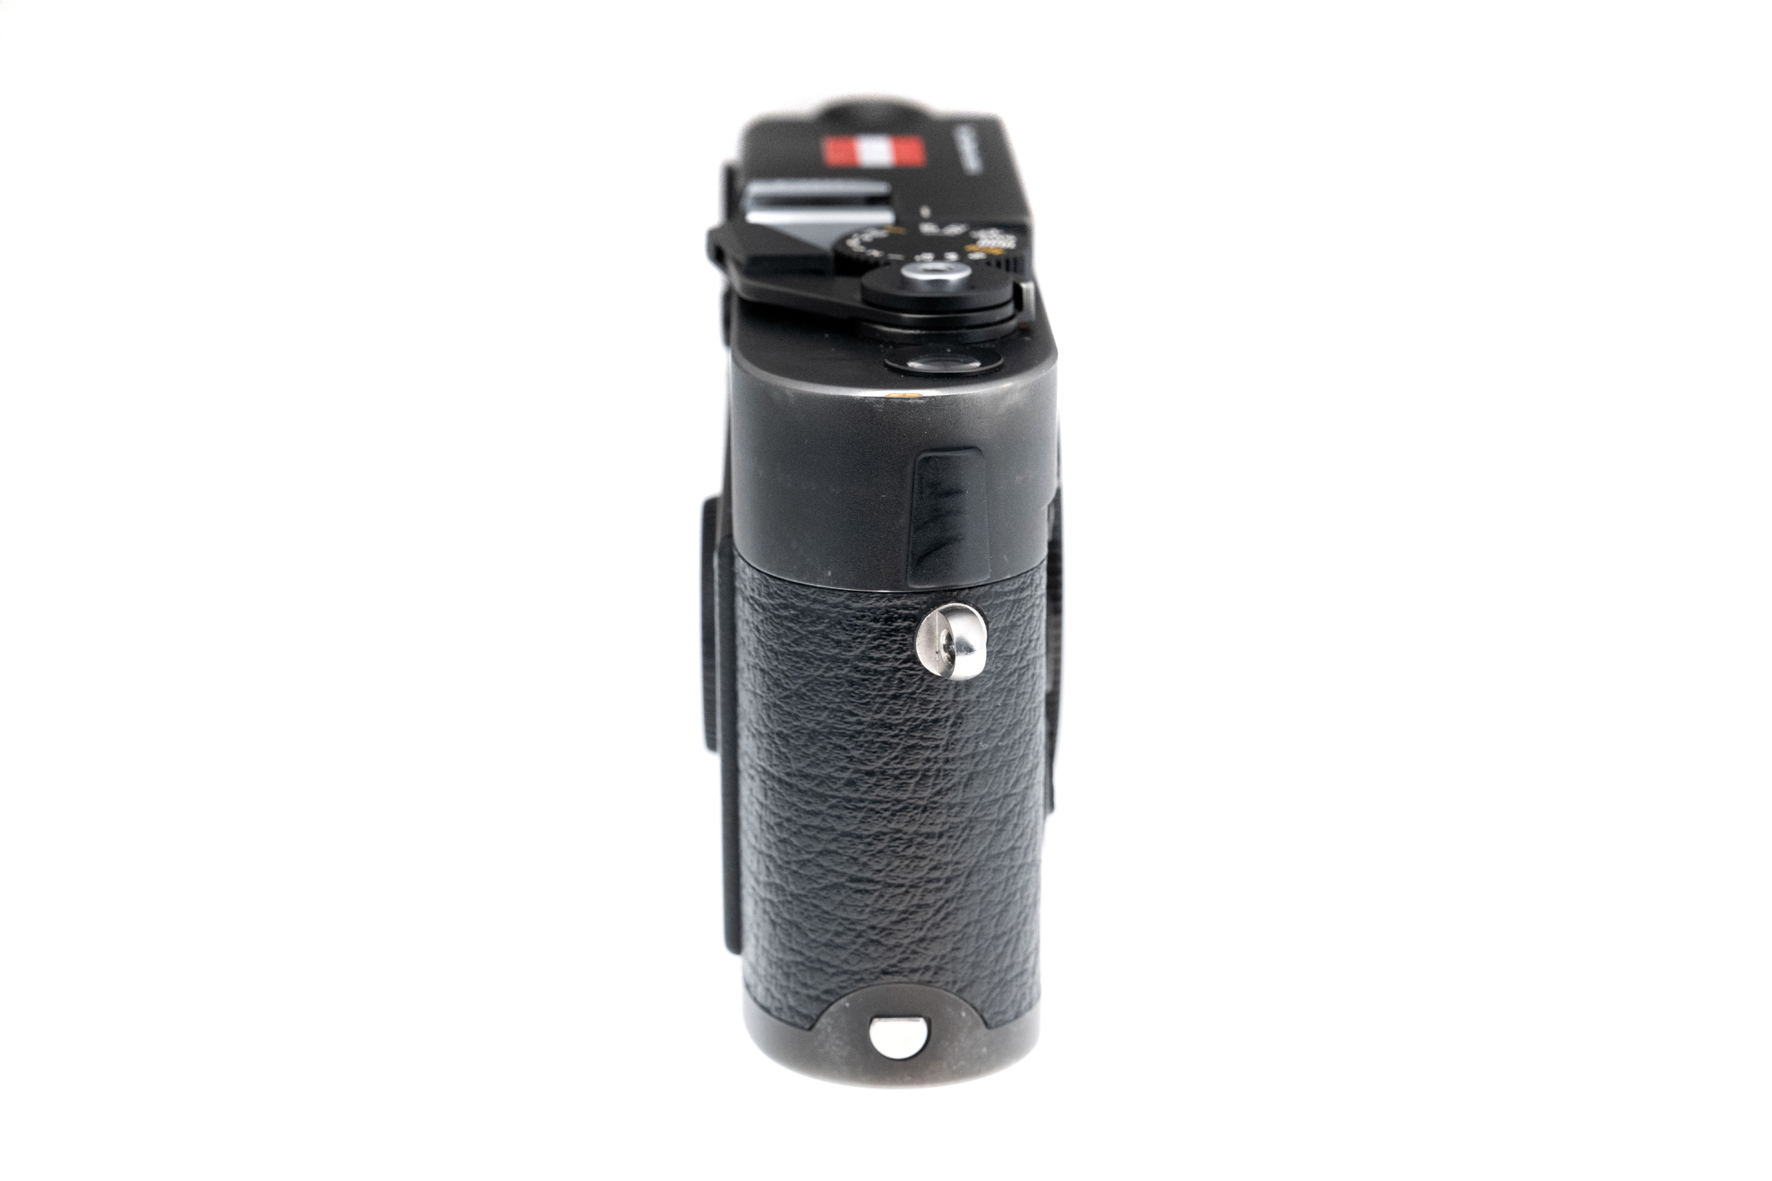 Leica M7 0,72 schwarz, a la Carte "Test Camera Austria" 